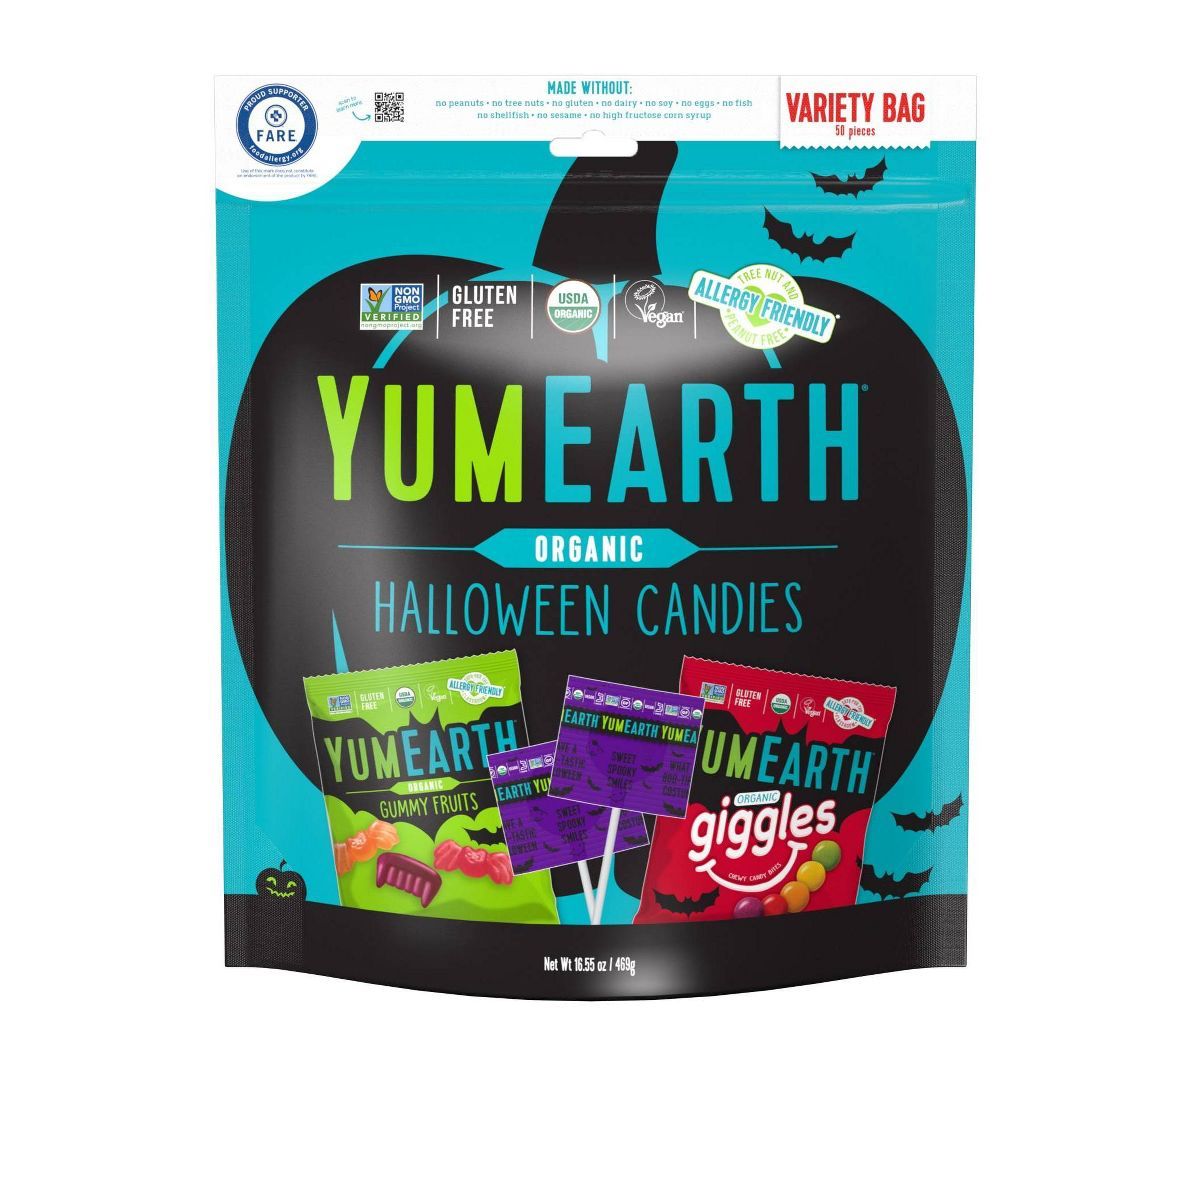 Yum Earth Halloween Organic Candies Variety Bag - 16.55oz | Target